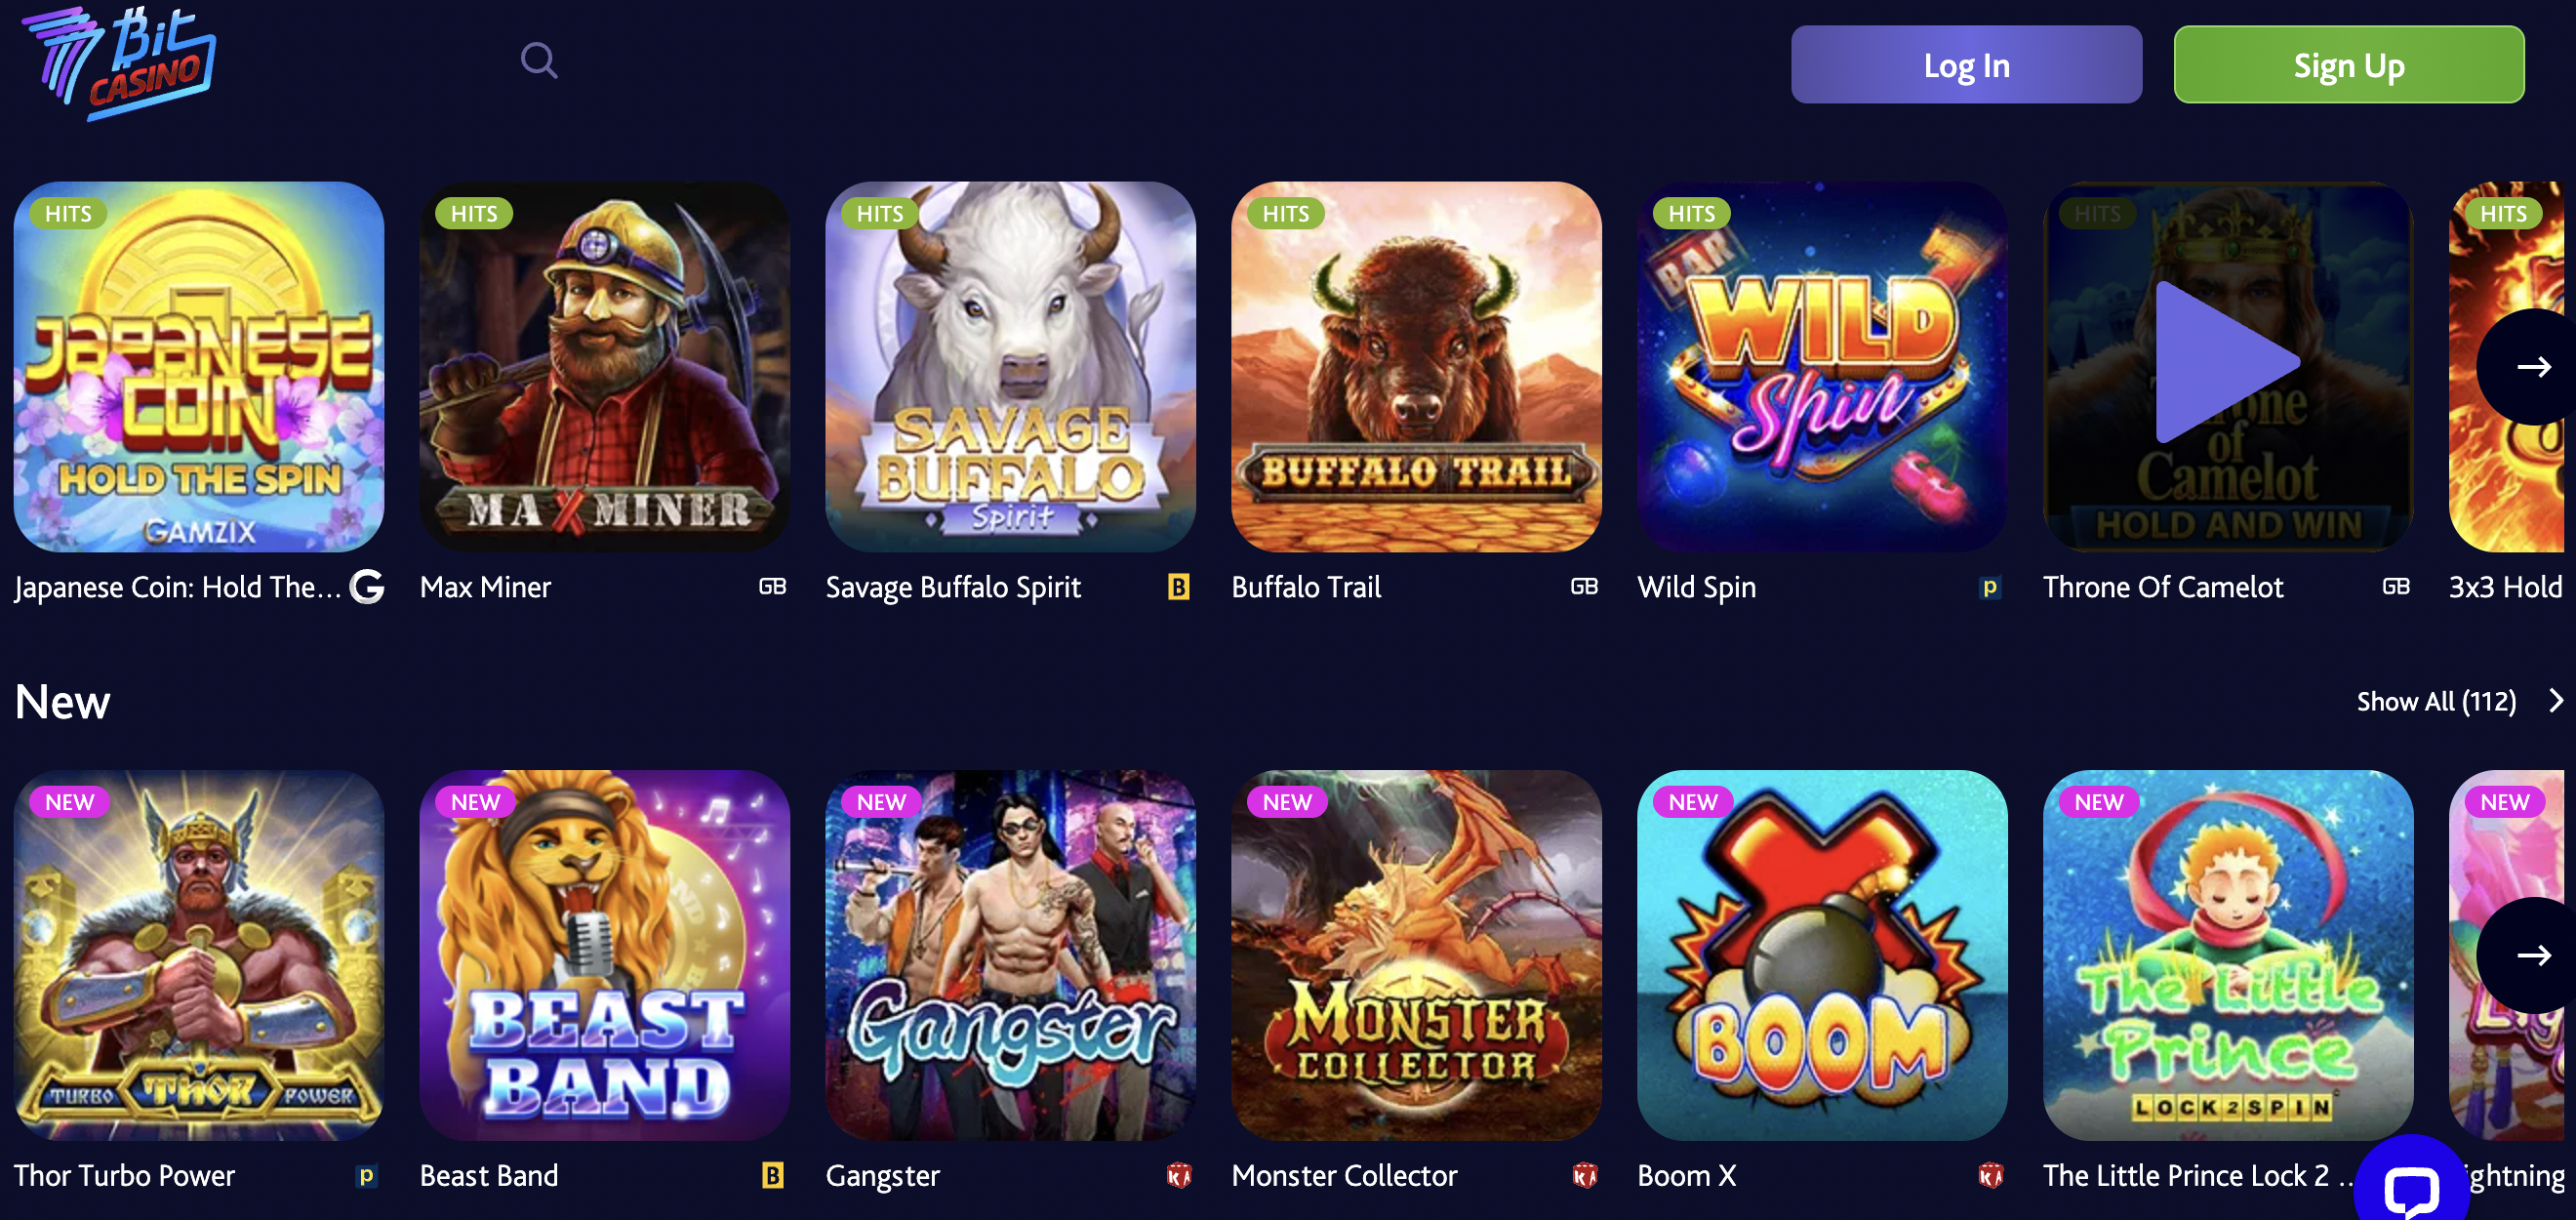 7Bit Casino Games